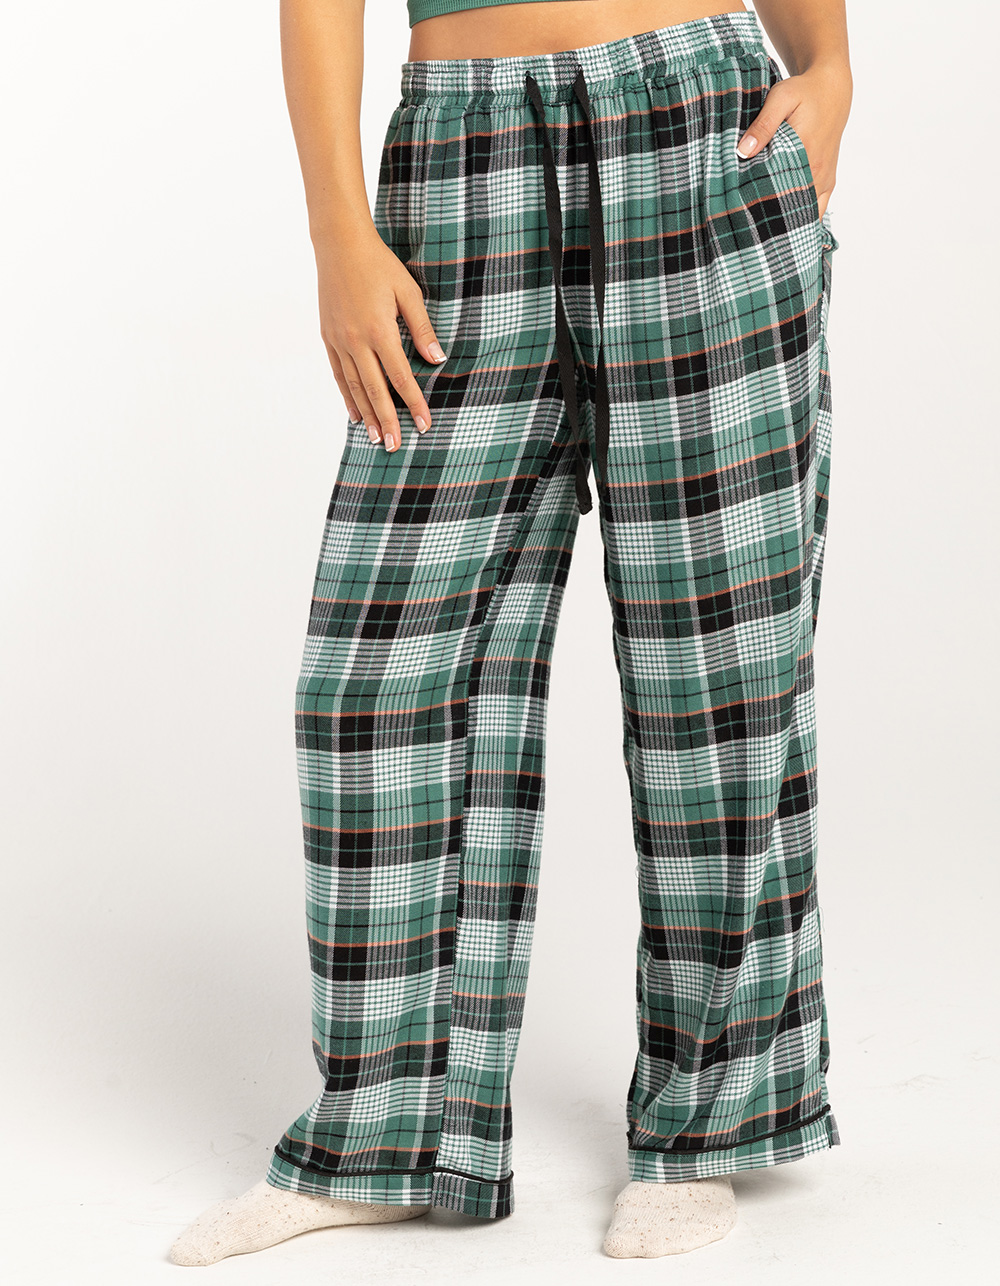 Black Women's Pajama Pants